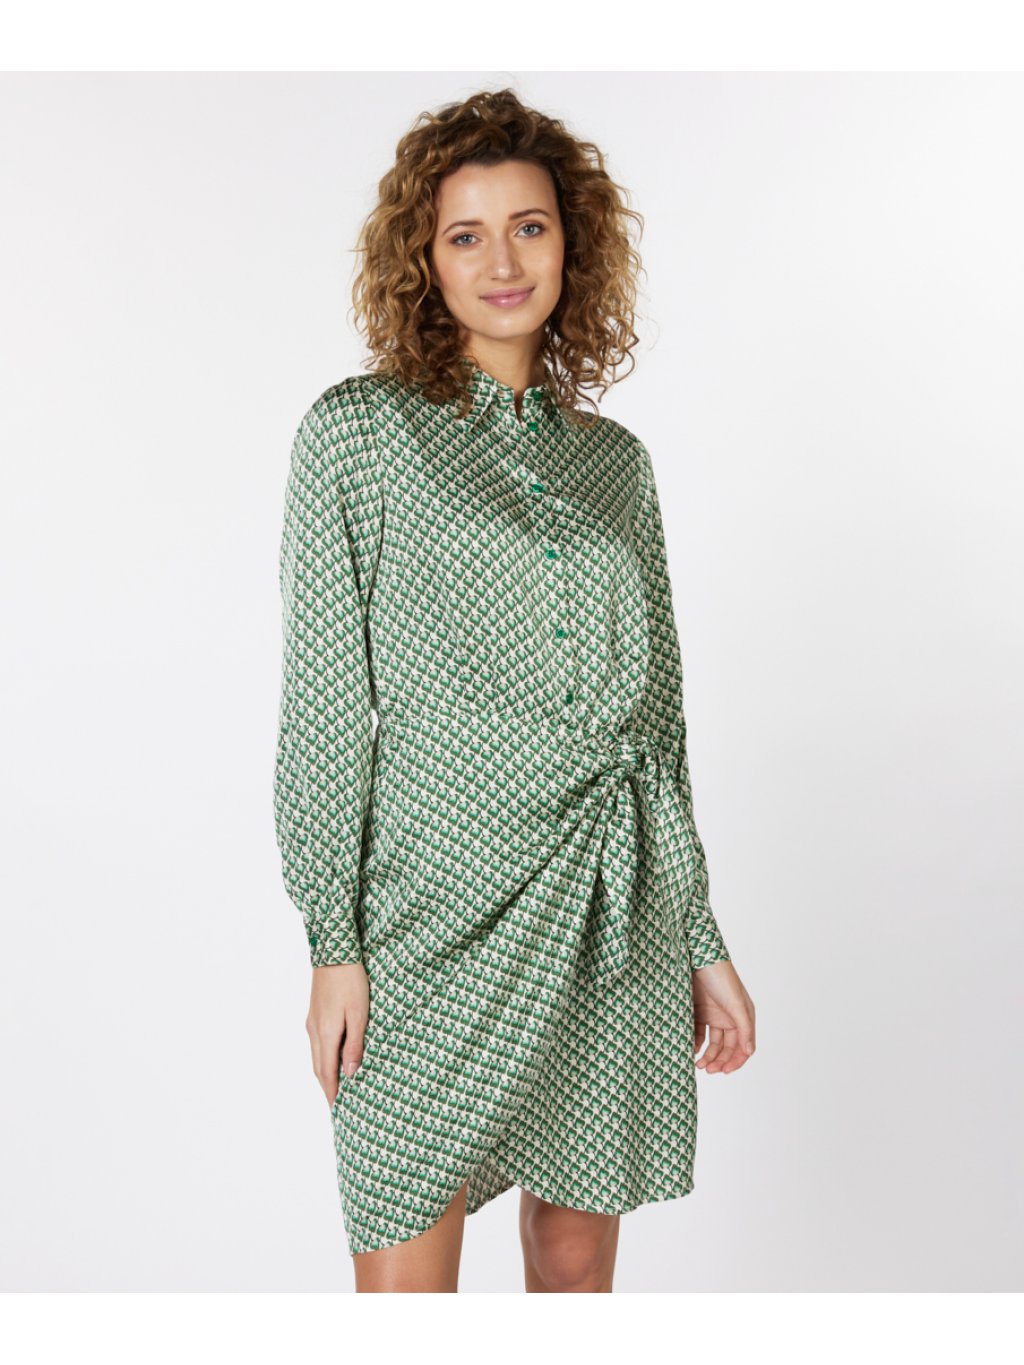 Šaty Esqualo 14002 béžovo zelené krátké zavinovací